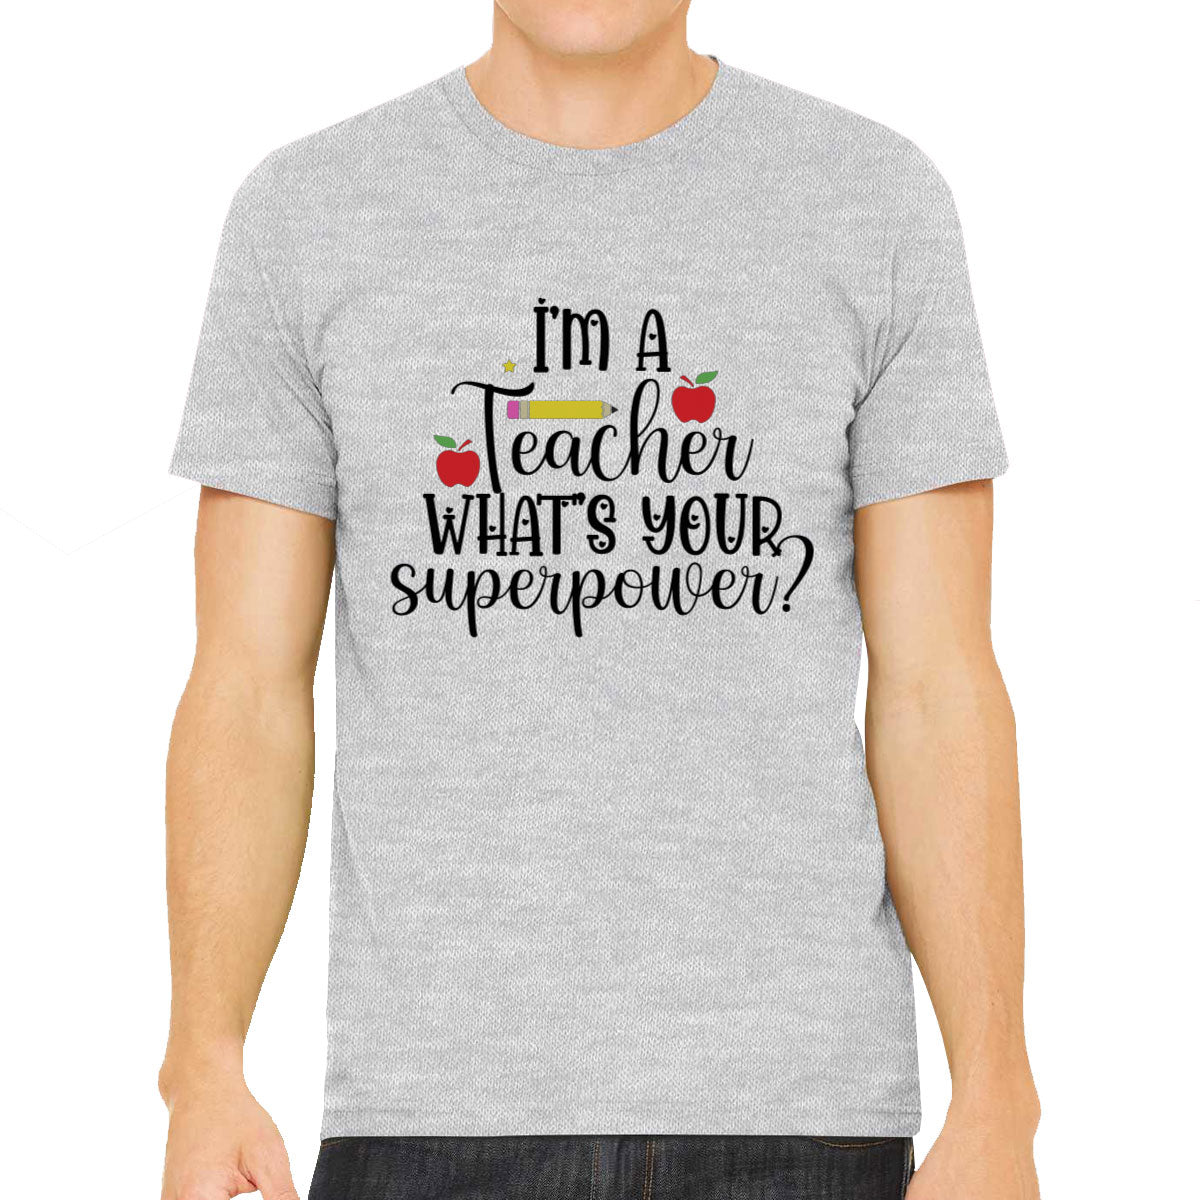 I'm A Teacher What's Your Superpower? Men's T-shirt